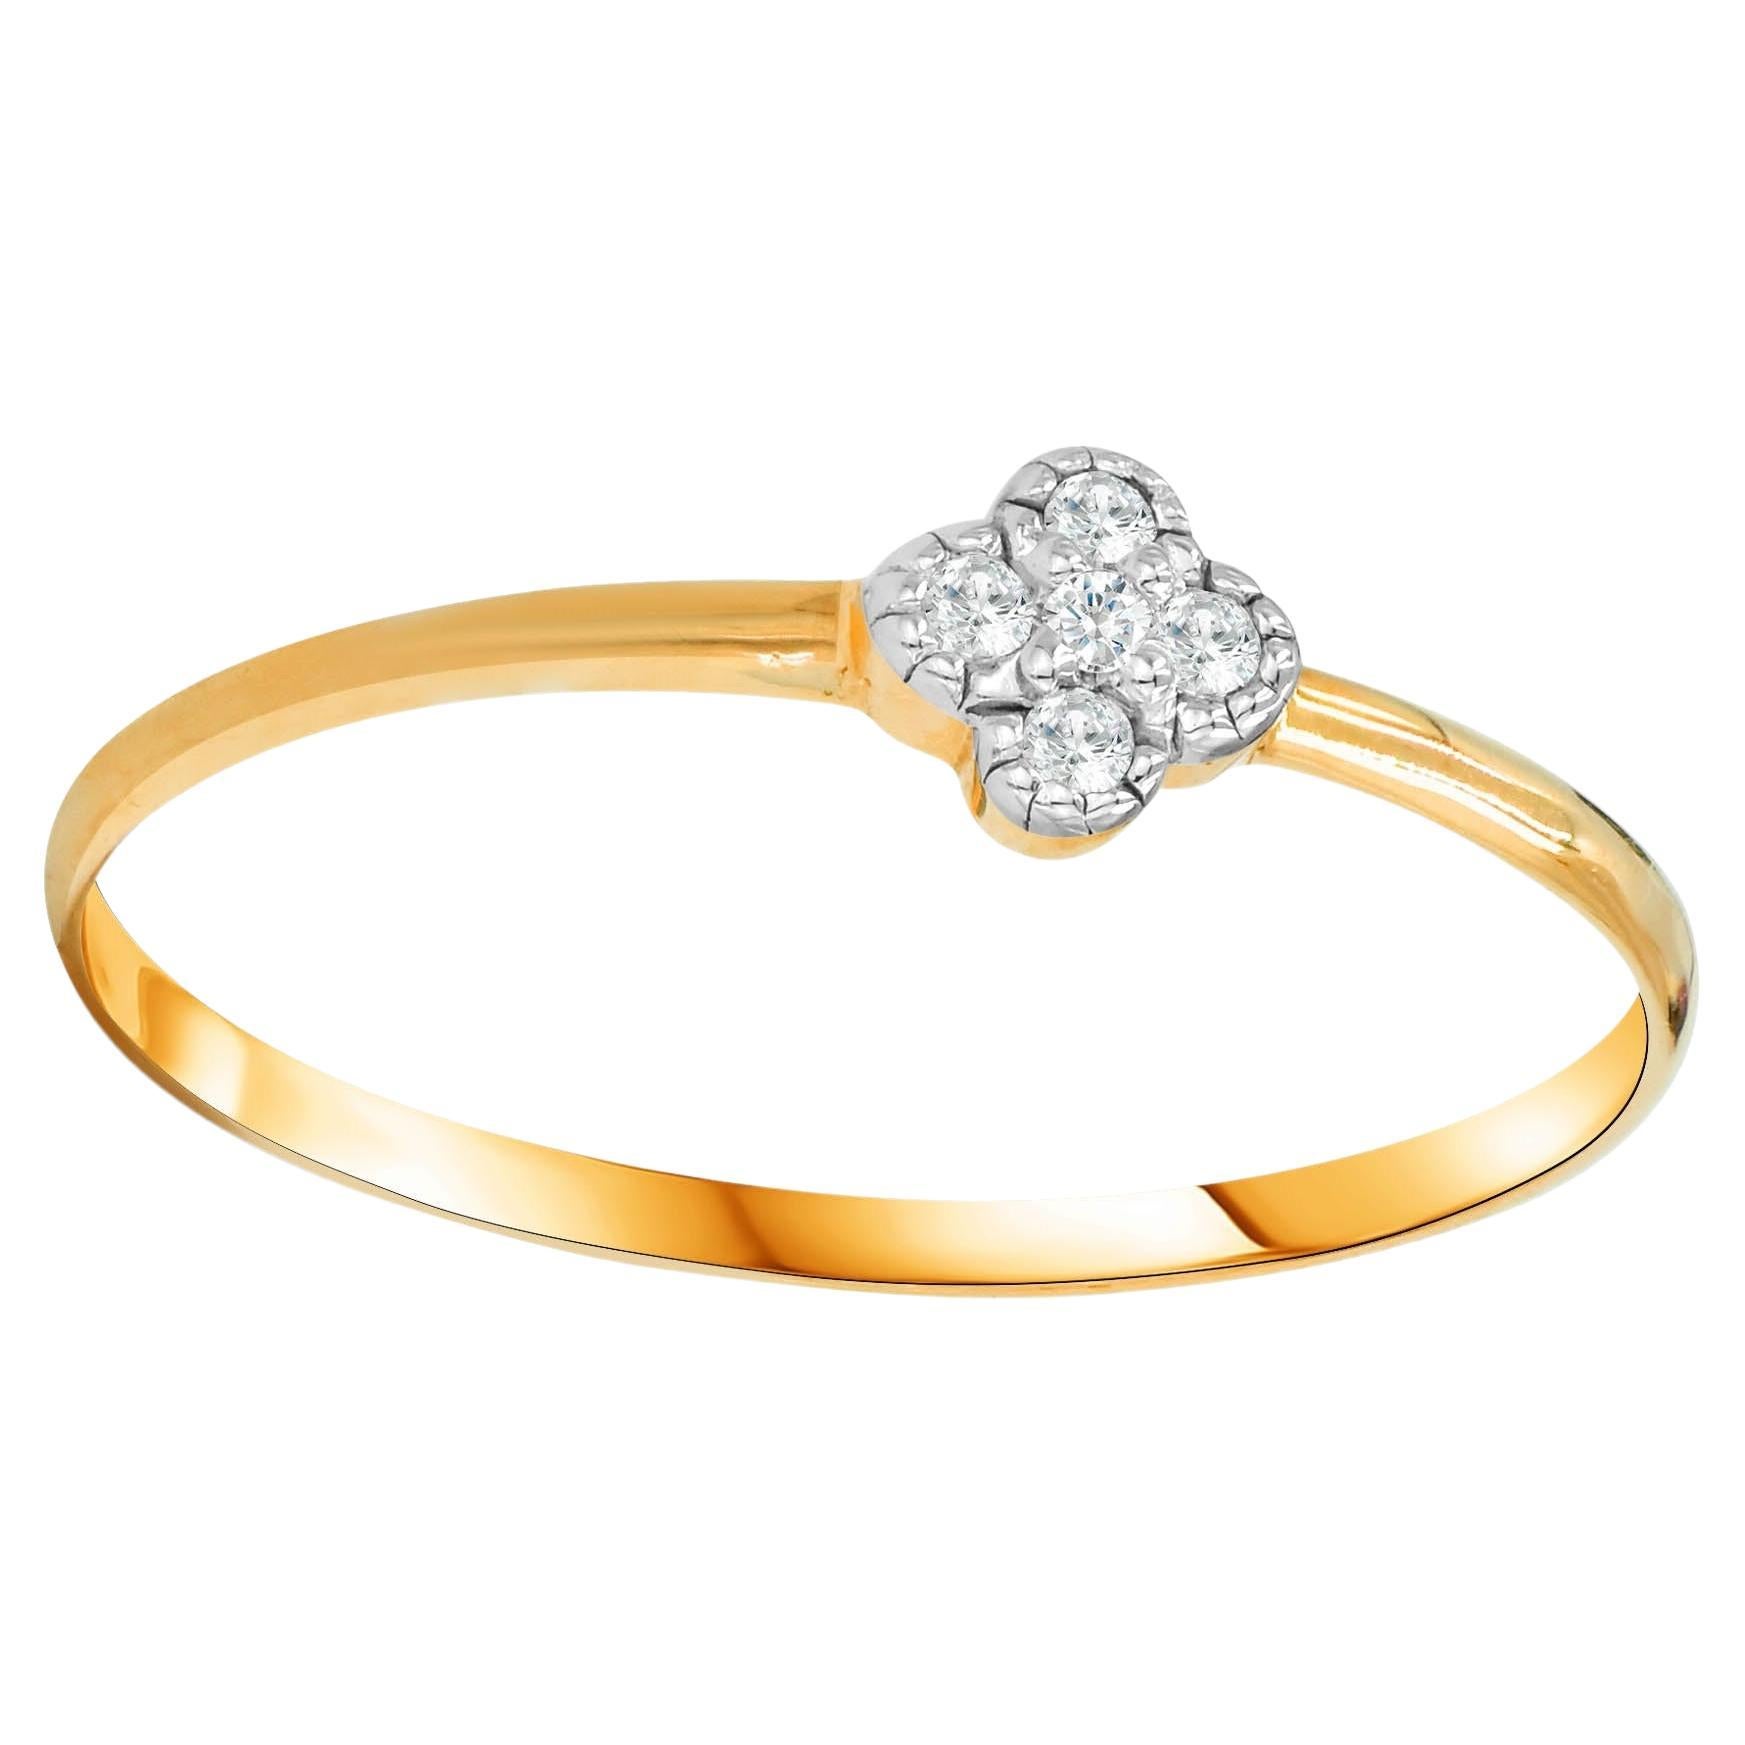 Im Angebot: 14k Gold Kleeblatt-Ring Dainty Minimalistischer Diamantring, stapelbar ()